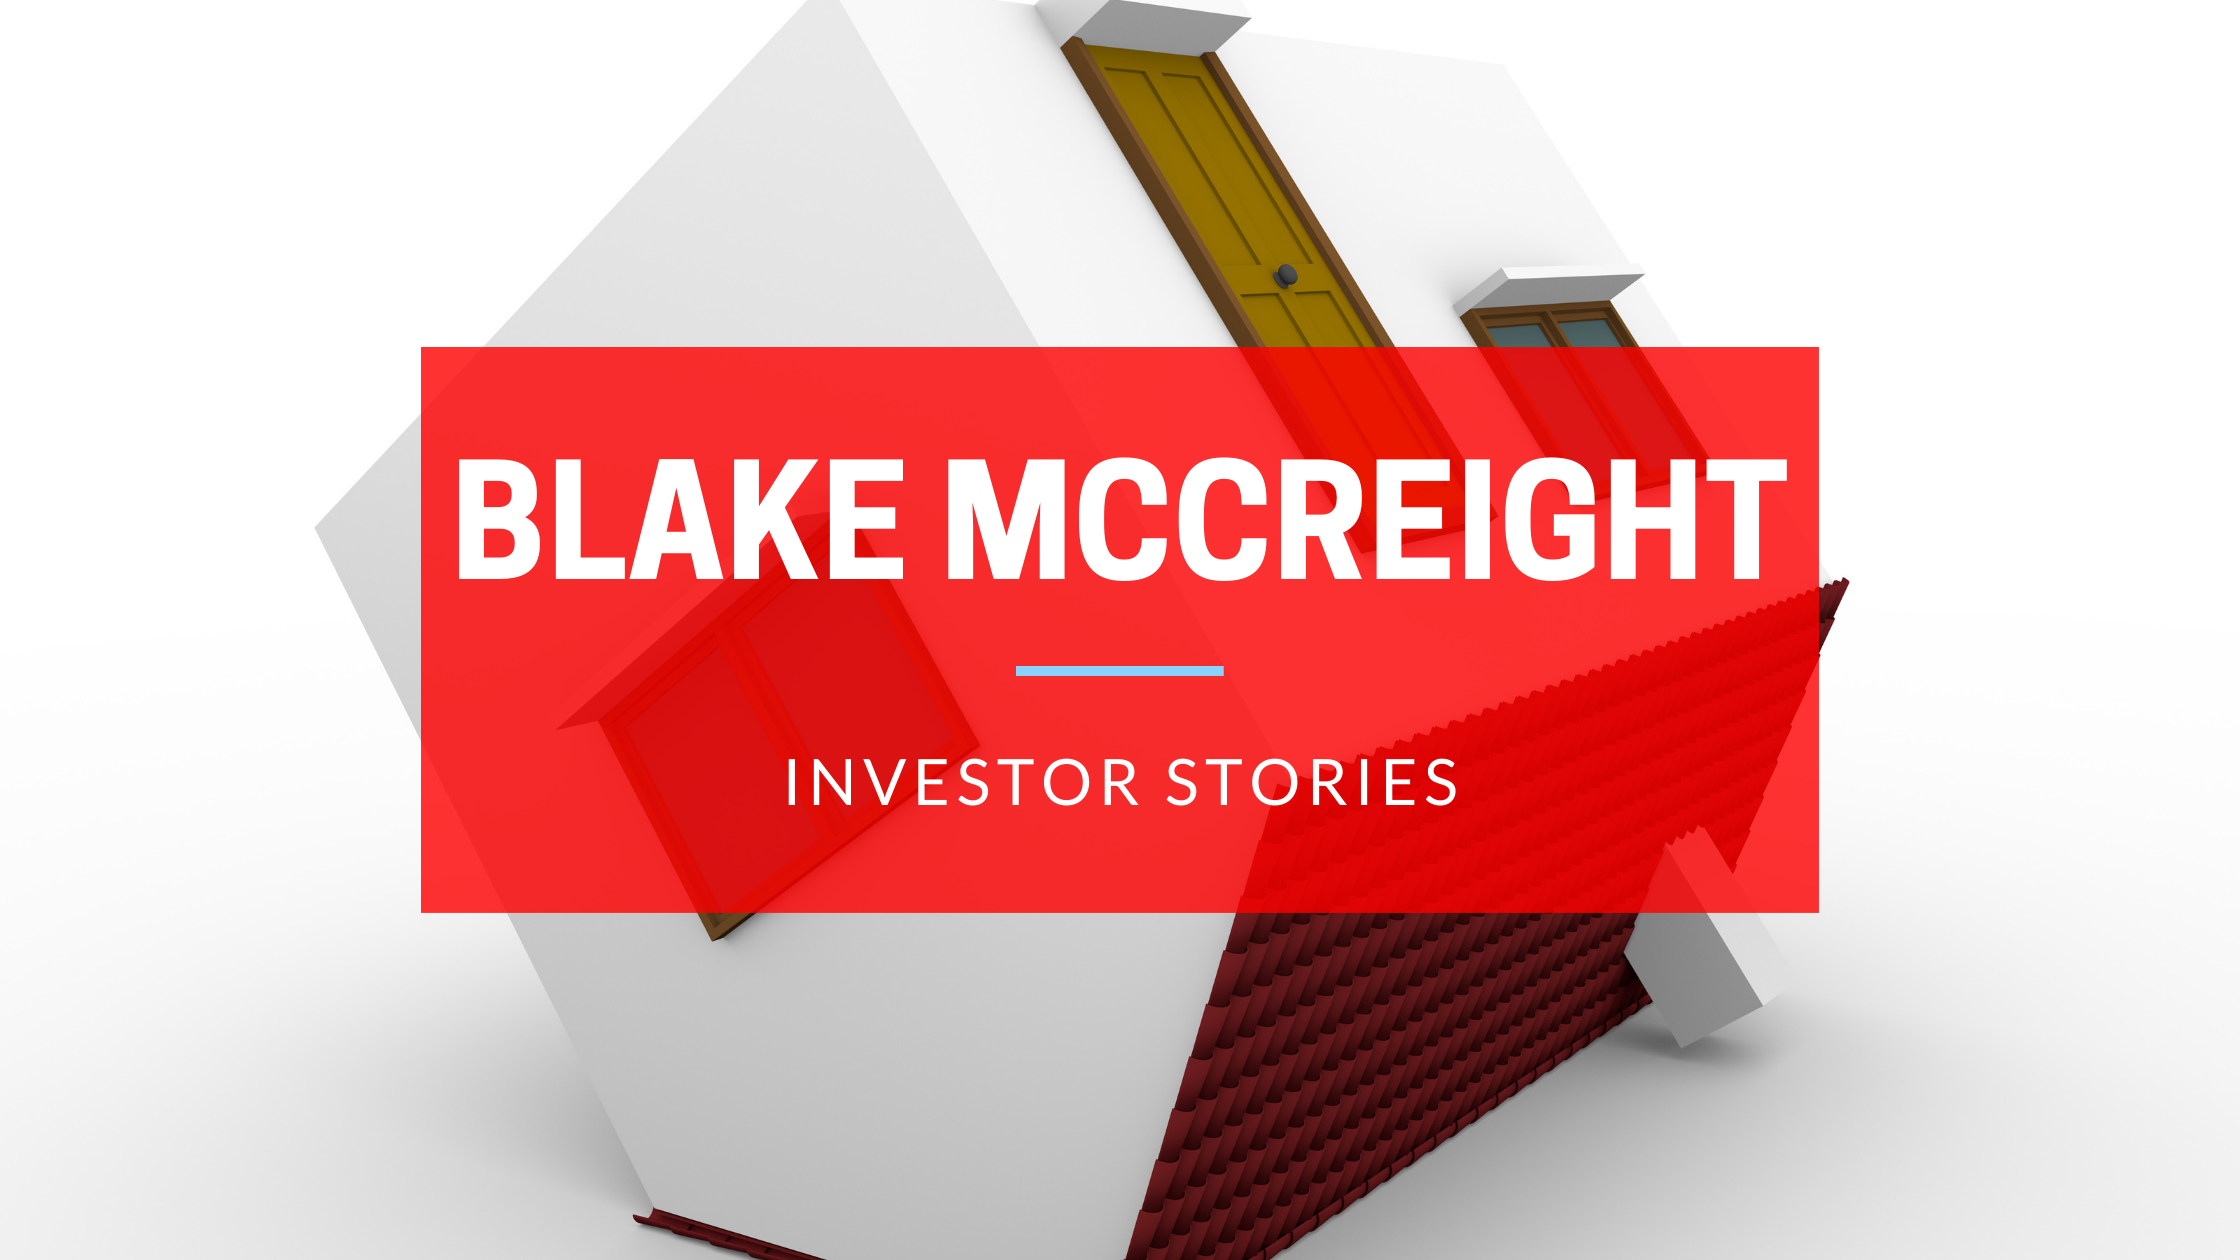 INVESTOR STORIES FEATURING BLAKE MCCREIGHT